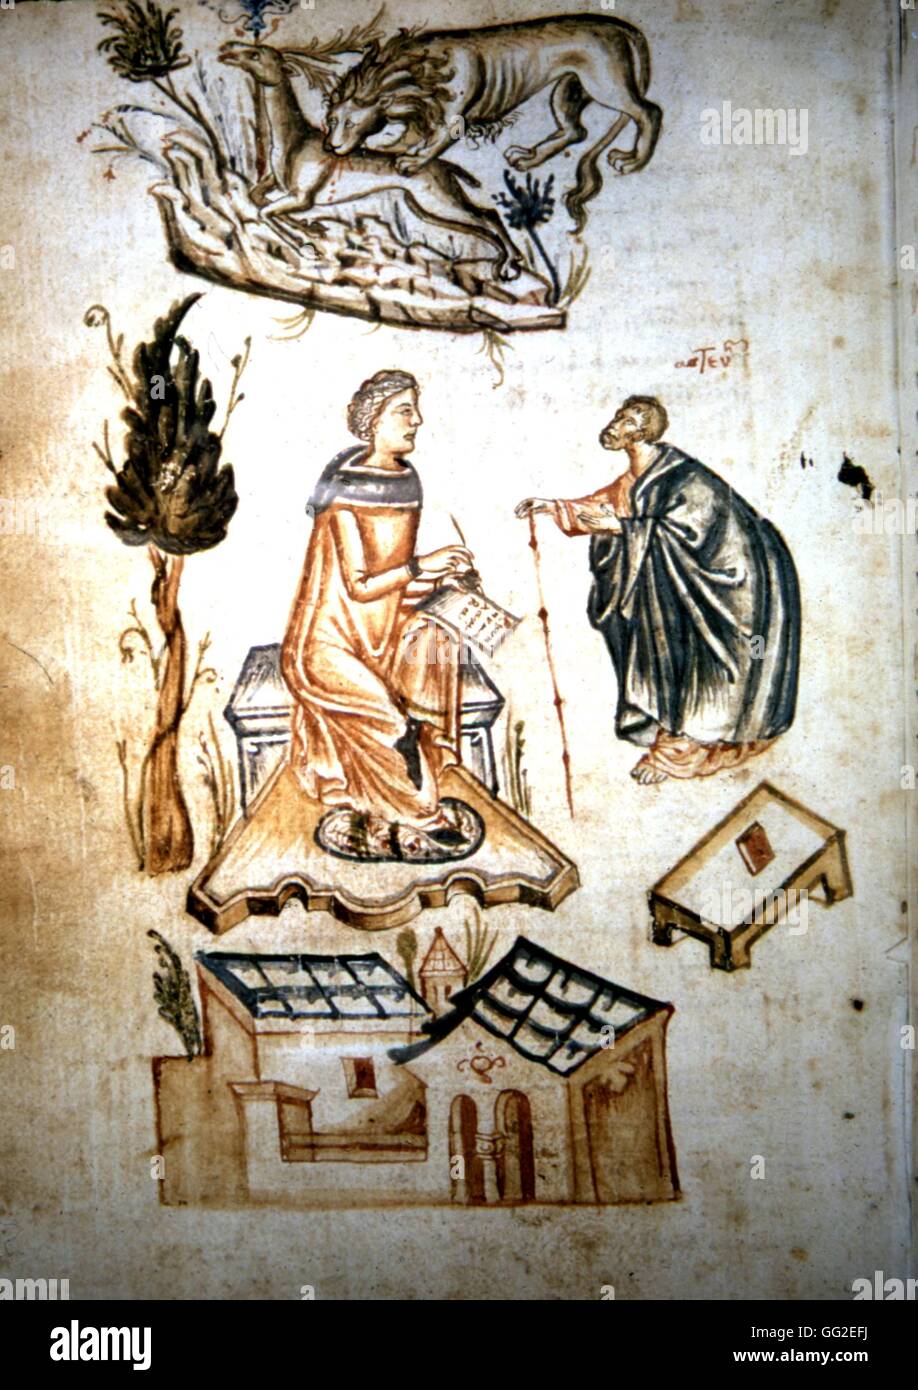 Antica medicina, consultazione medica 14-15th secoli di Parigi in miniatura. Bibliothèque de l'école de médecine Foto Stock